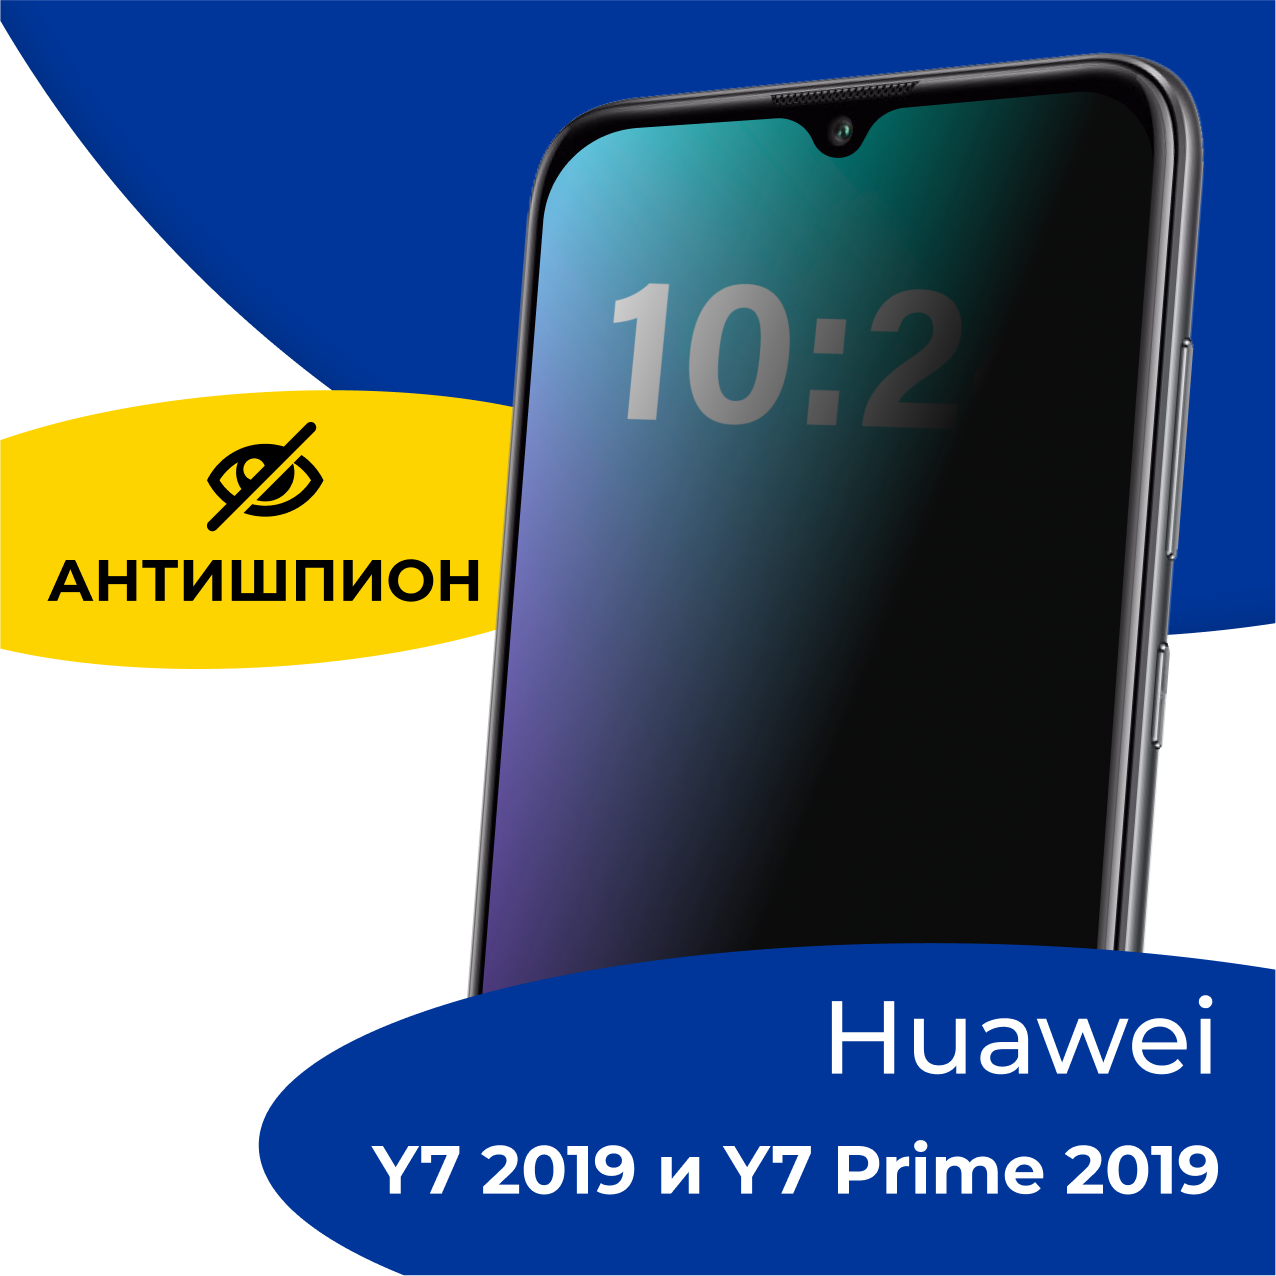 Защитное стекло Антишпион на телефон Huawei Y7 2019 и Y7 Prime 2019 / Противоударное стекло 5D для смартфона Хуавей У7 2019 и У7 Прайм 2019